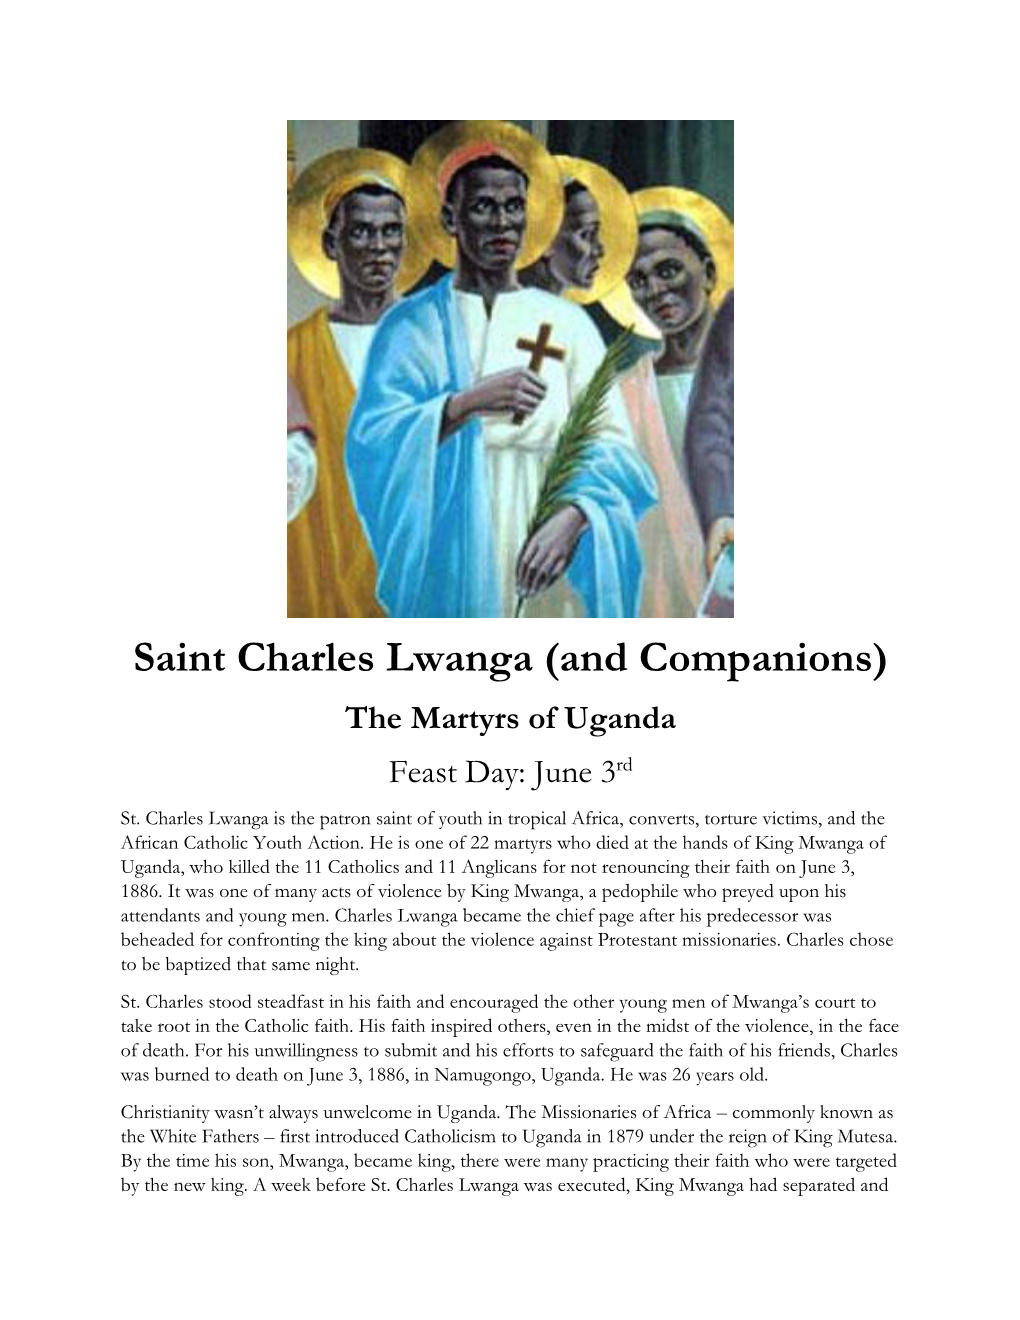 Saint Charles Lwanga (And Companions) the Martyrs of Uganda Feast Day: June 3Rd St